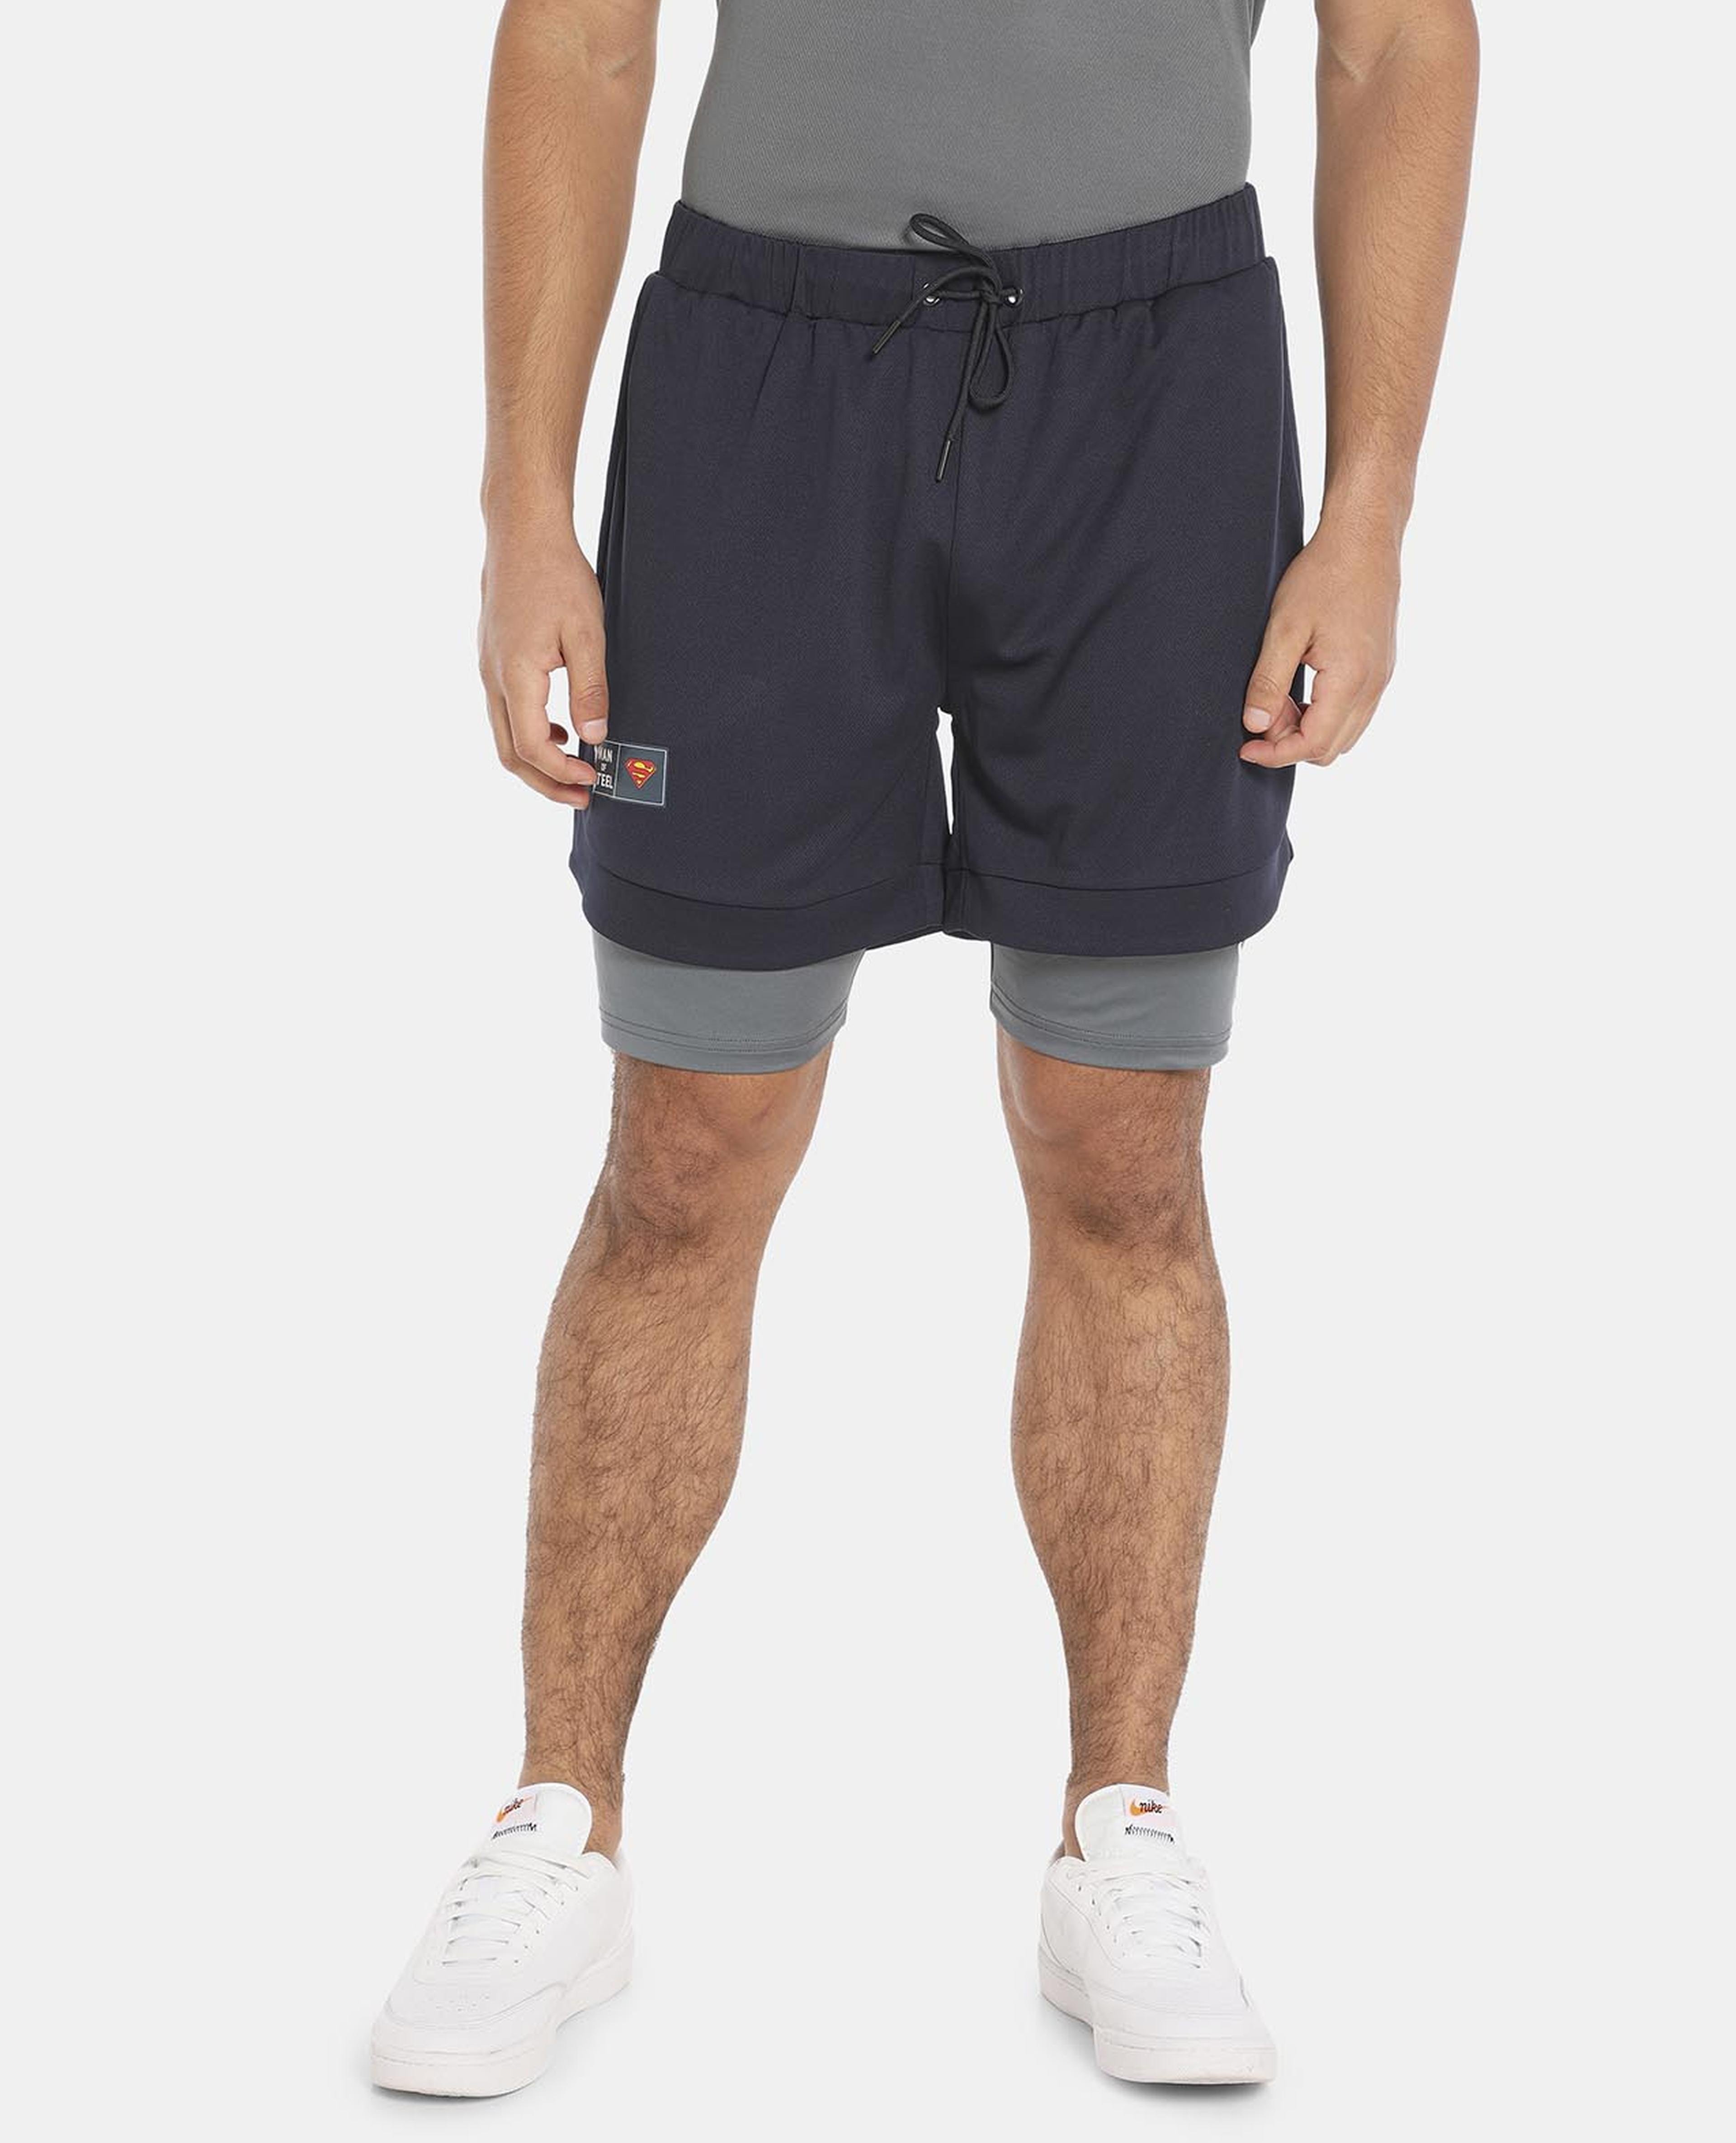 Blue Activewear Shorts